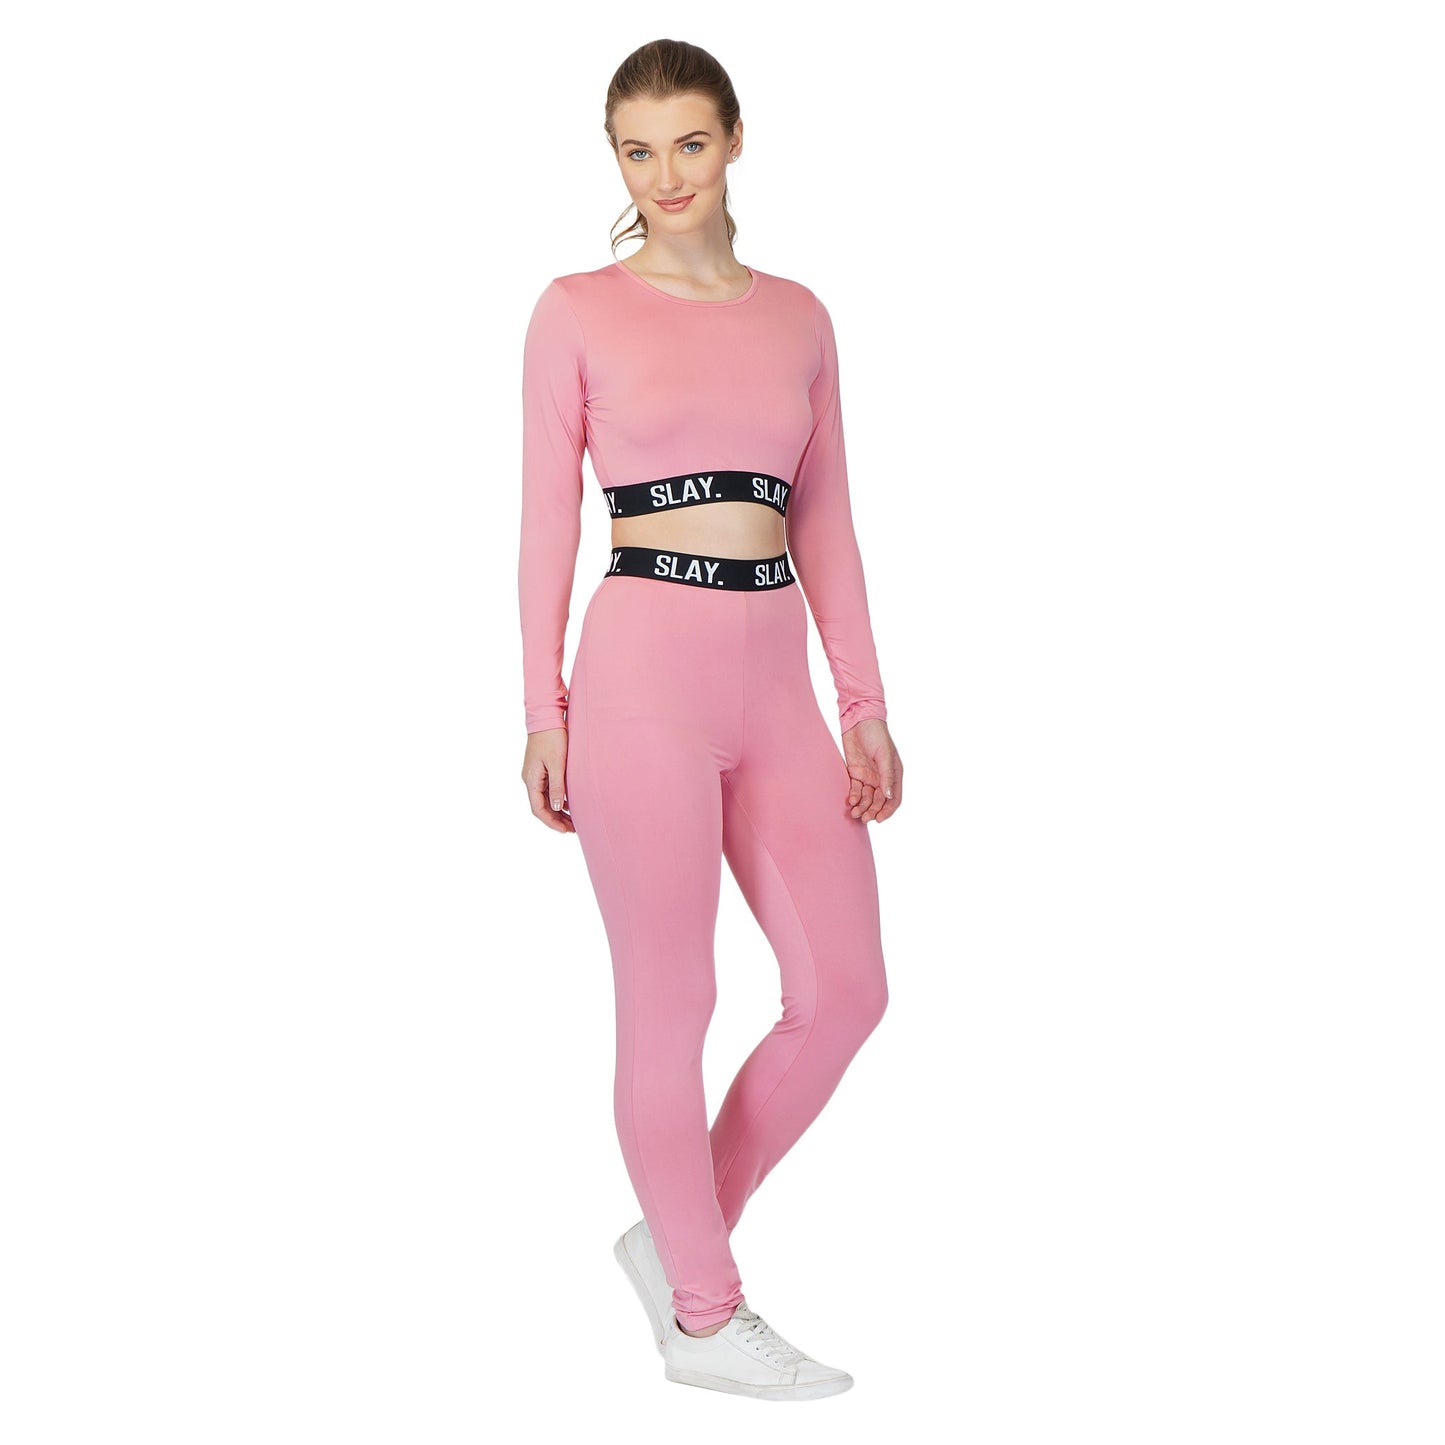 SLAY. Sport Women's Activewear Full Sleeves Crop Top Pink